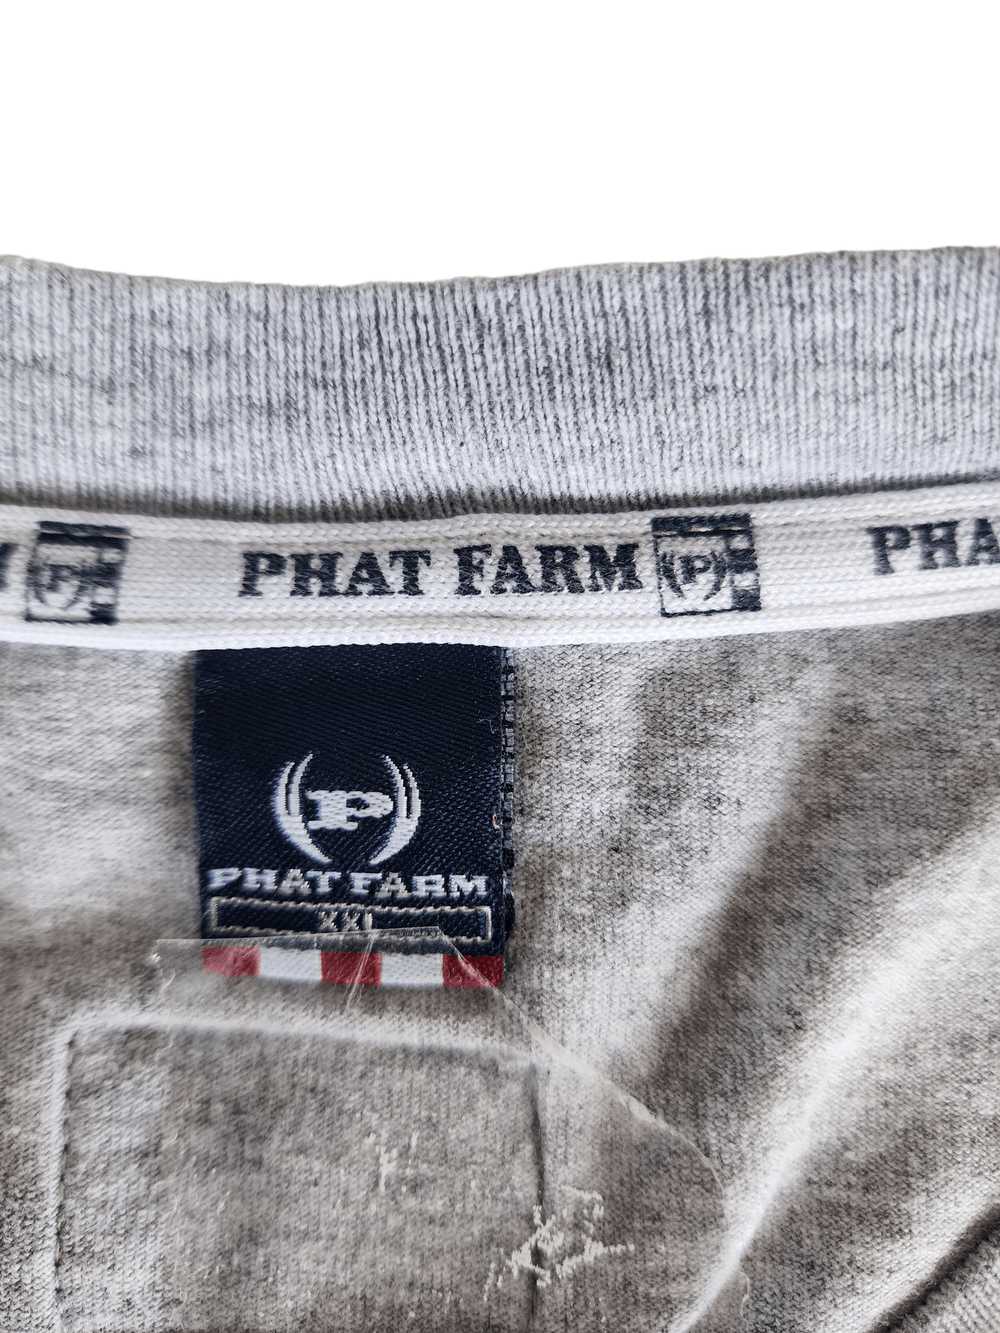 Phat Farm VTG Phat Farm Men's Shirt - image 3